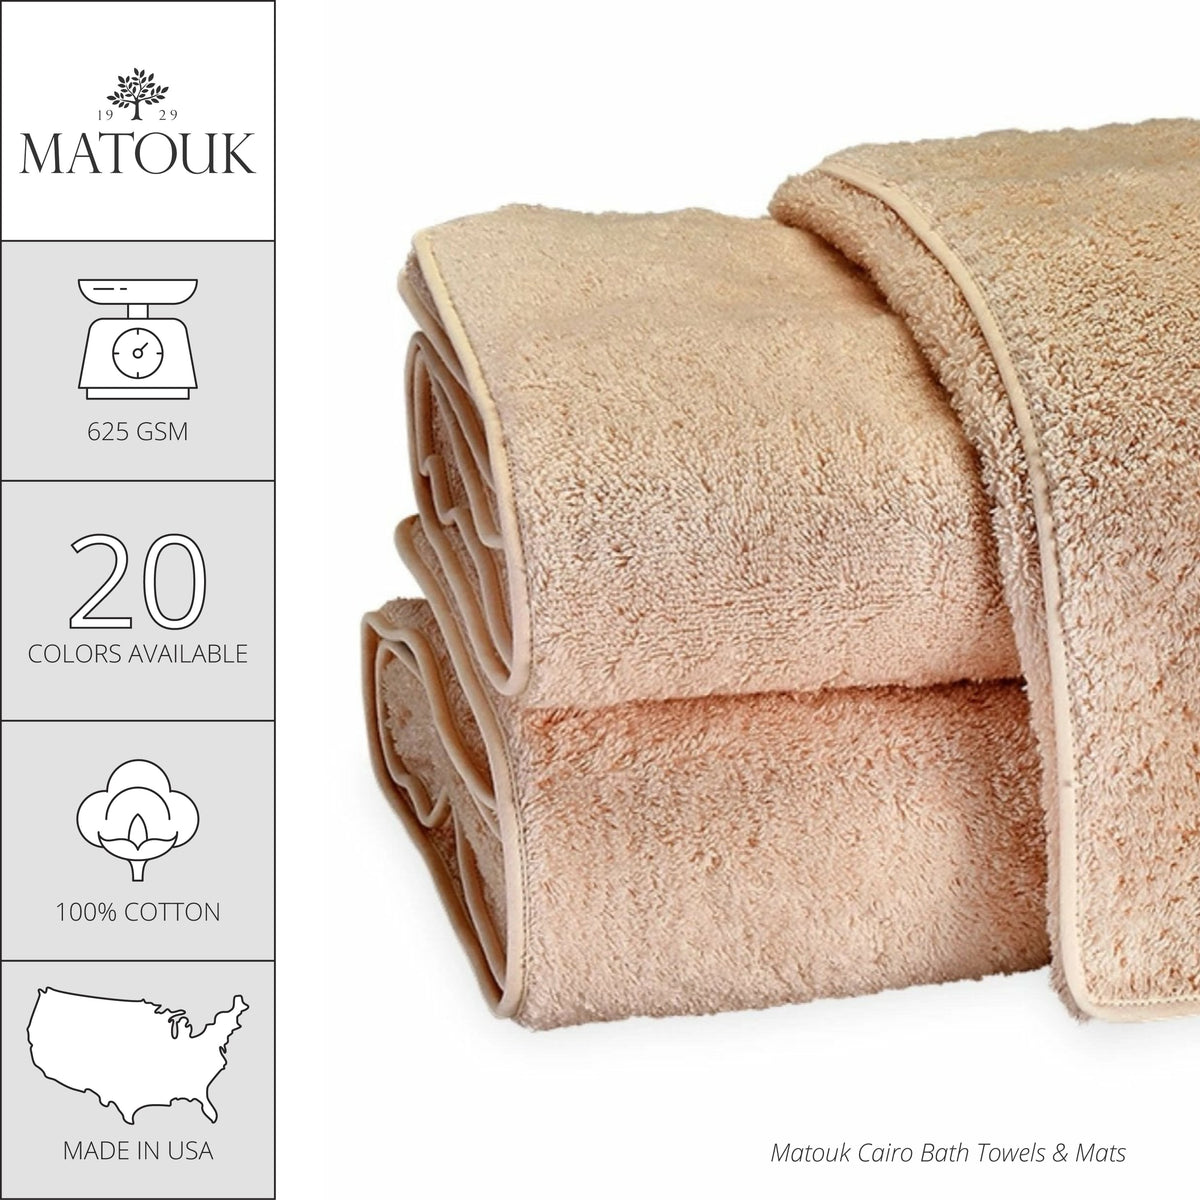 Matouk Cairo Bath Towels and Mats - Sea/Sea